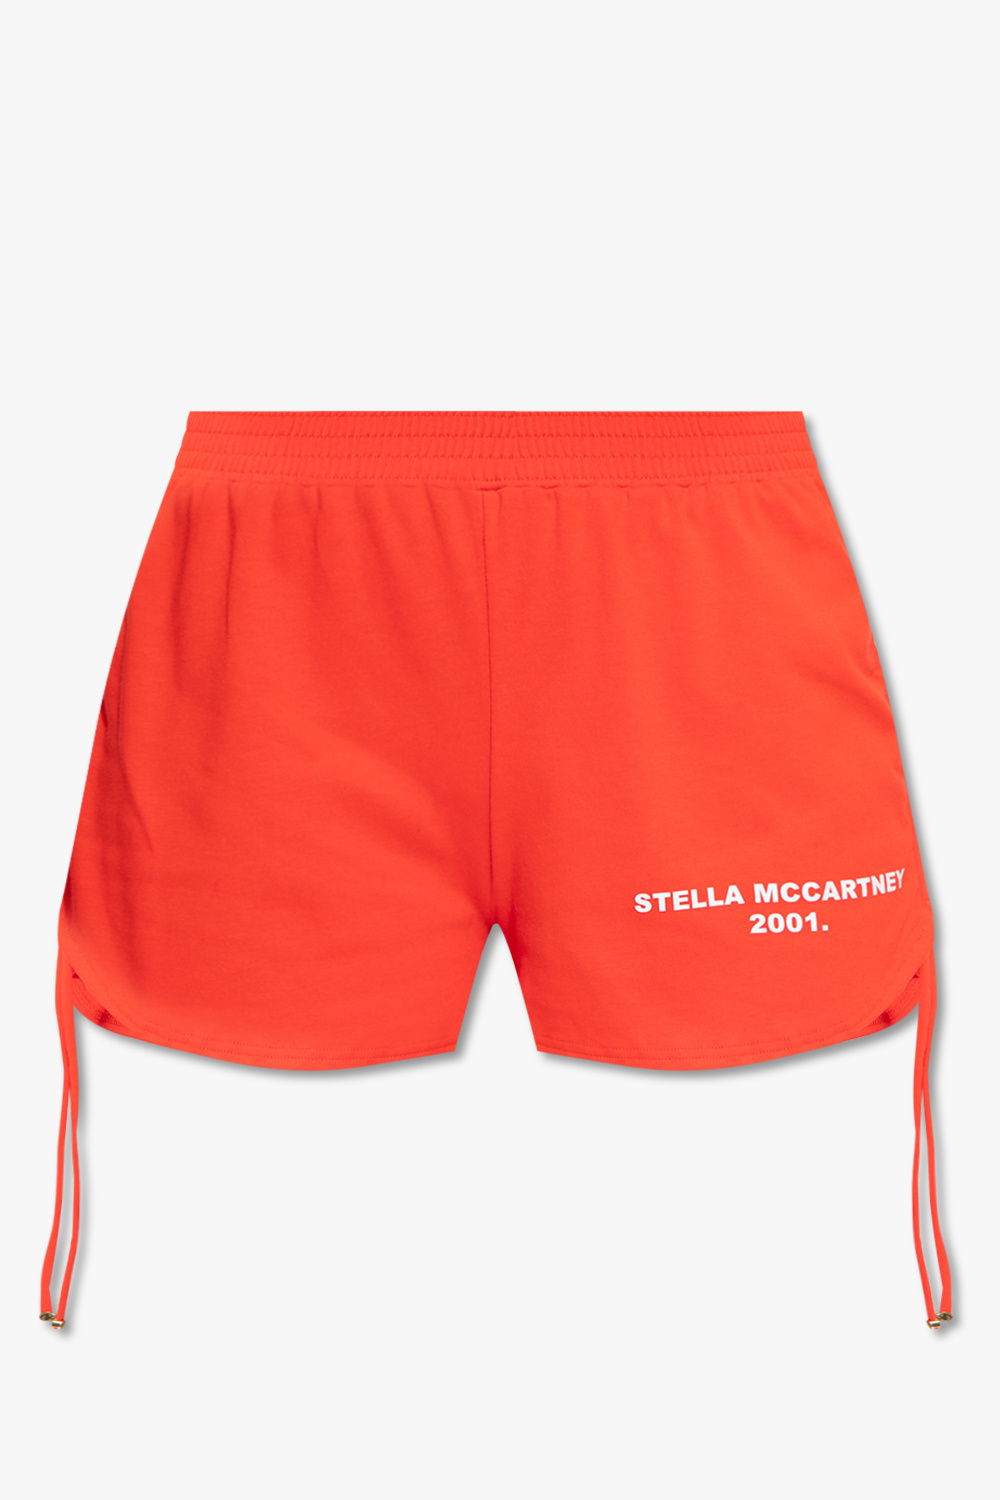 Red adidas by Mccatney stella mccartney truepace sport bh item